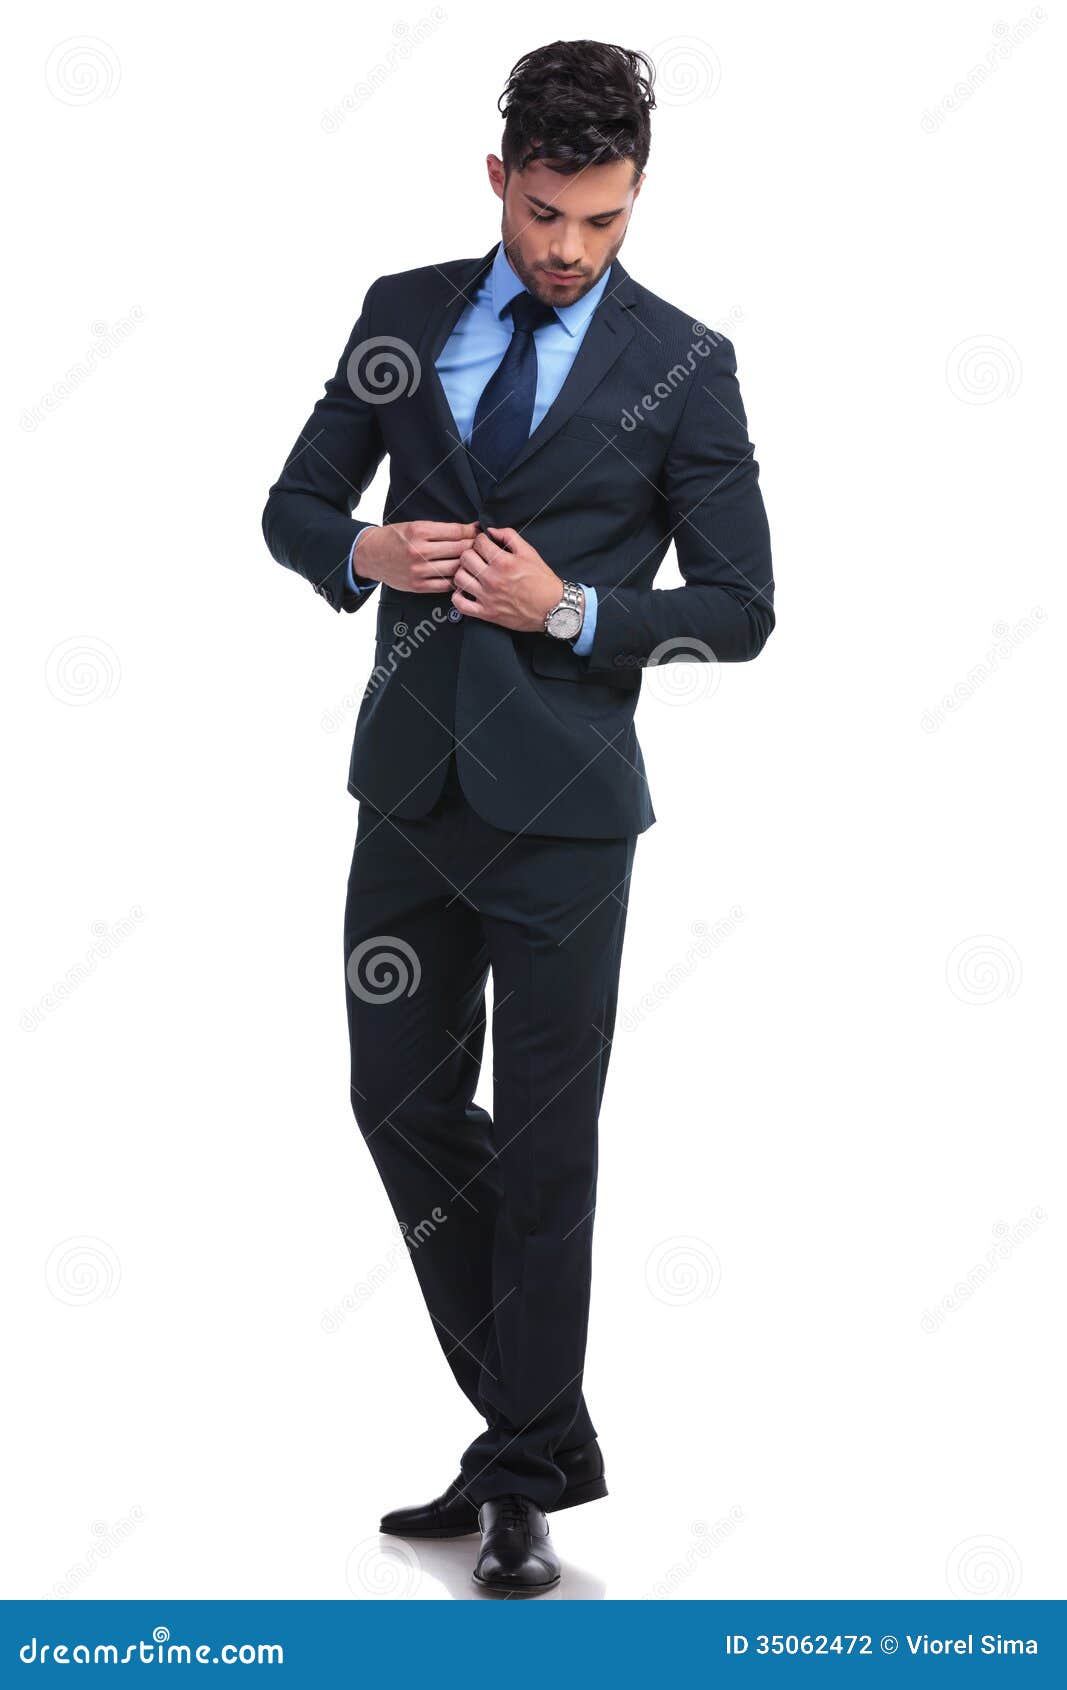 fashion business man un buttoning his suit looking down full length portrait 35062472